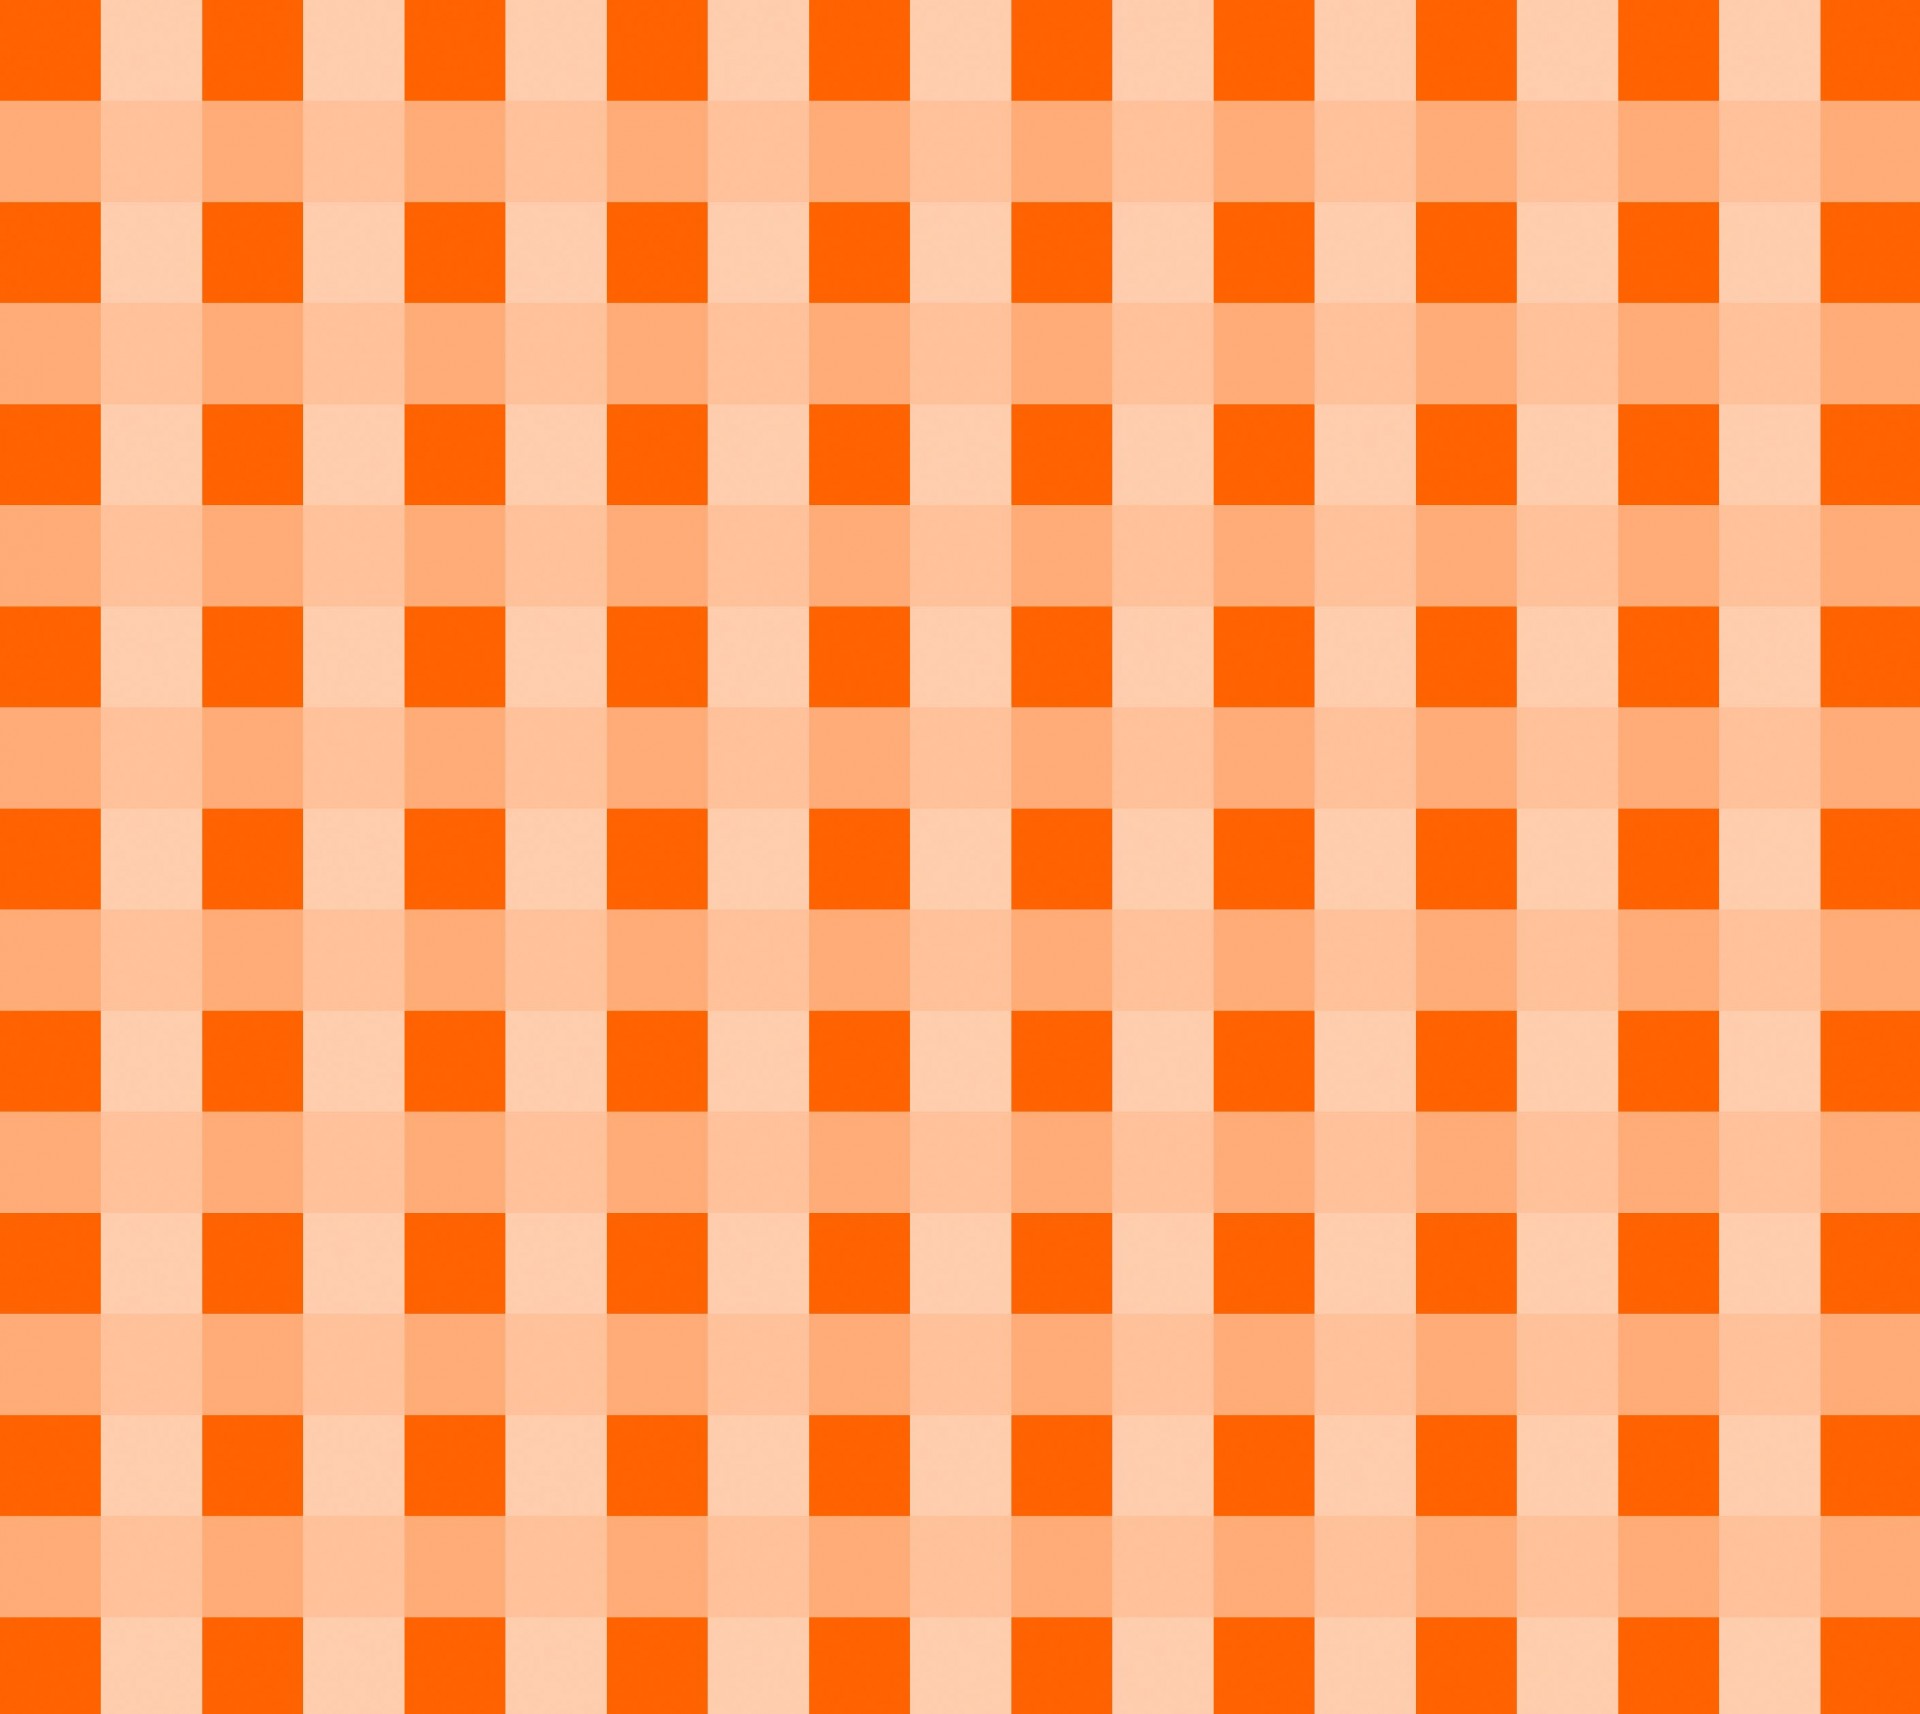 Blocks,bands,check,orange,tints - free image from needpix.com.